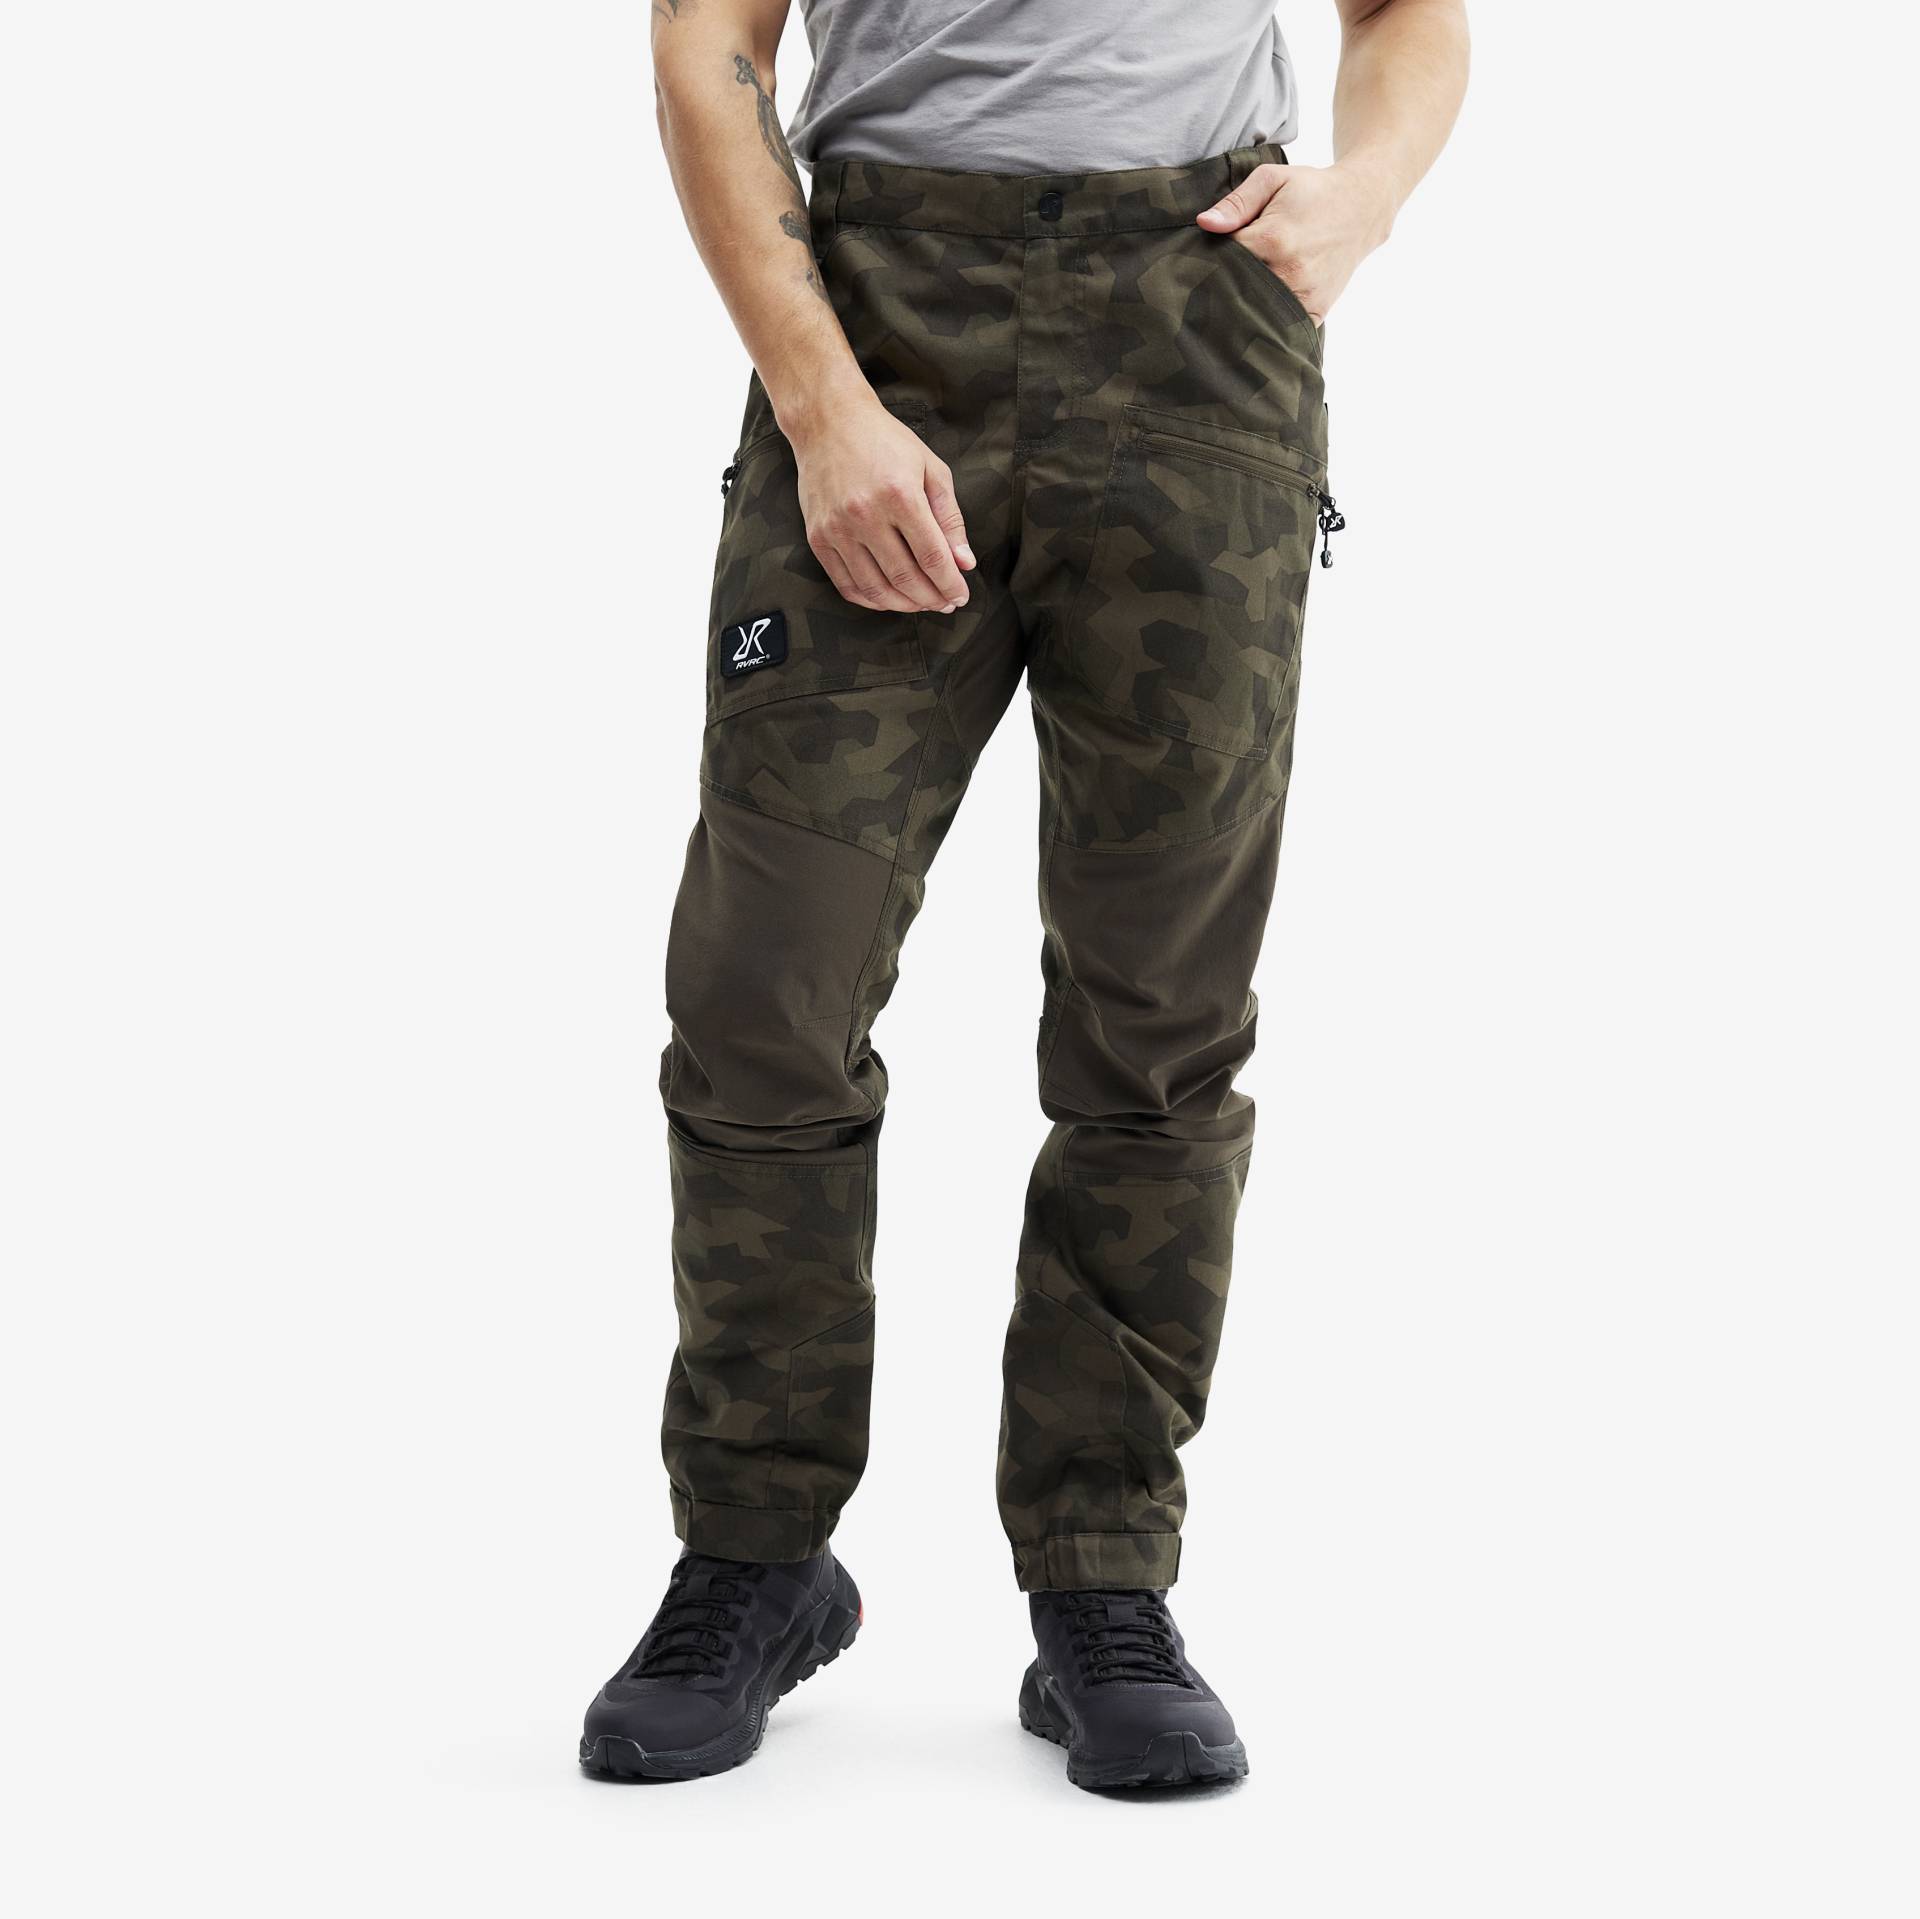 Nordwand Pro Pants Herren Earth Camo, Größe:XS - Outdoorhose, Wanderhose & Trekkinghose von RevolutionRace